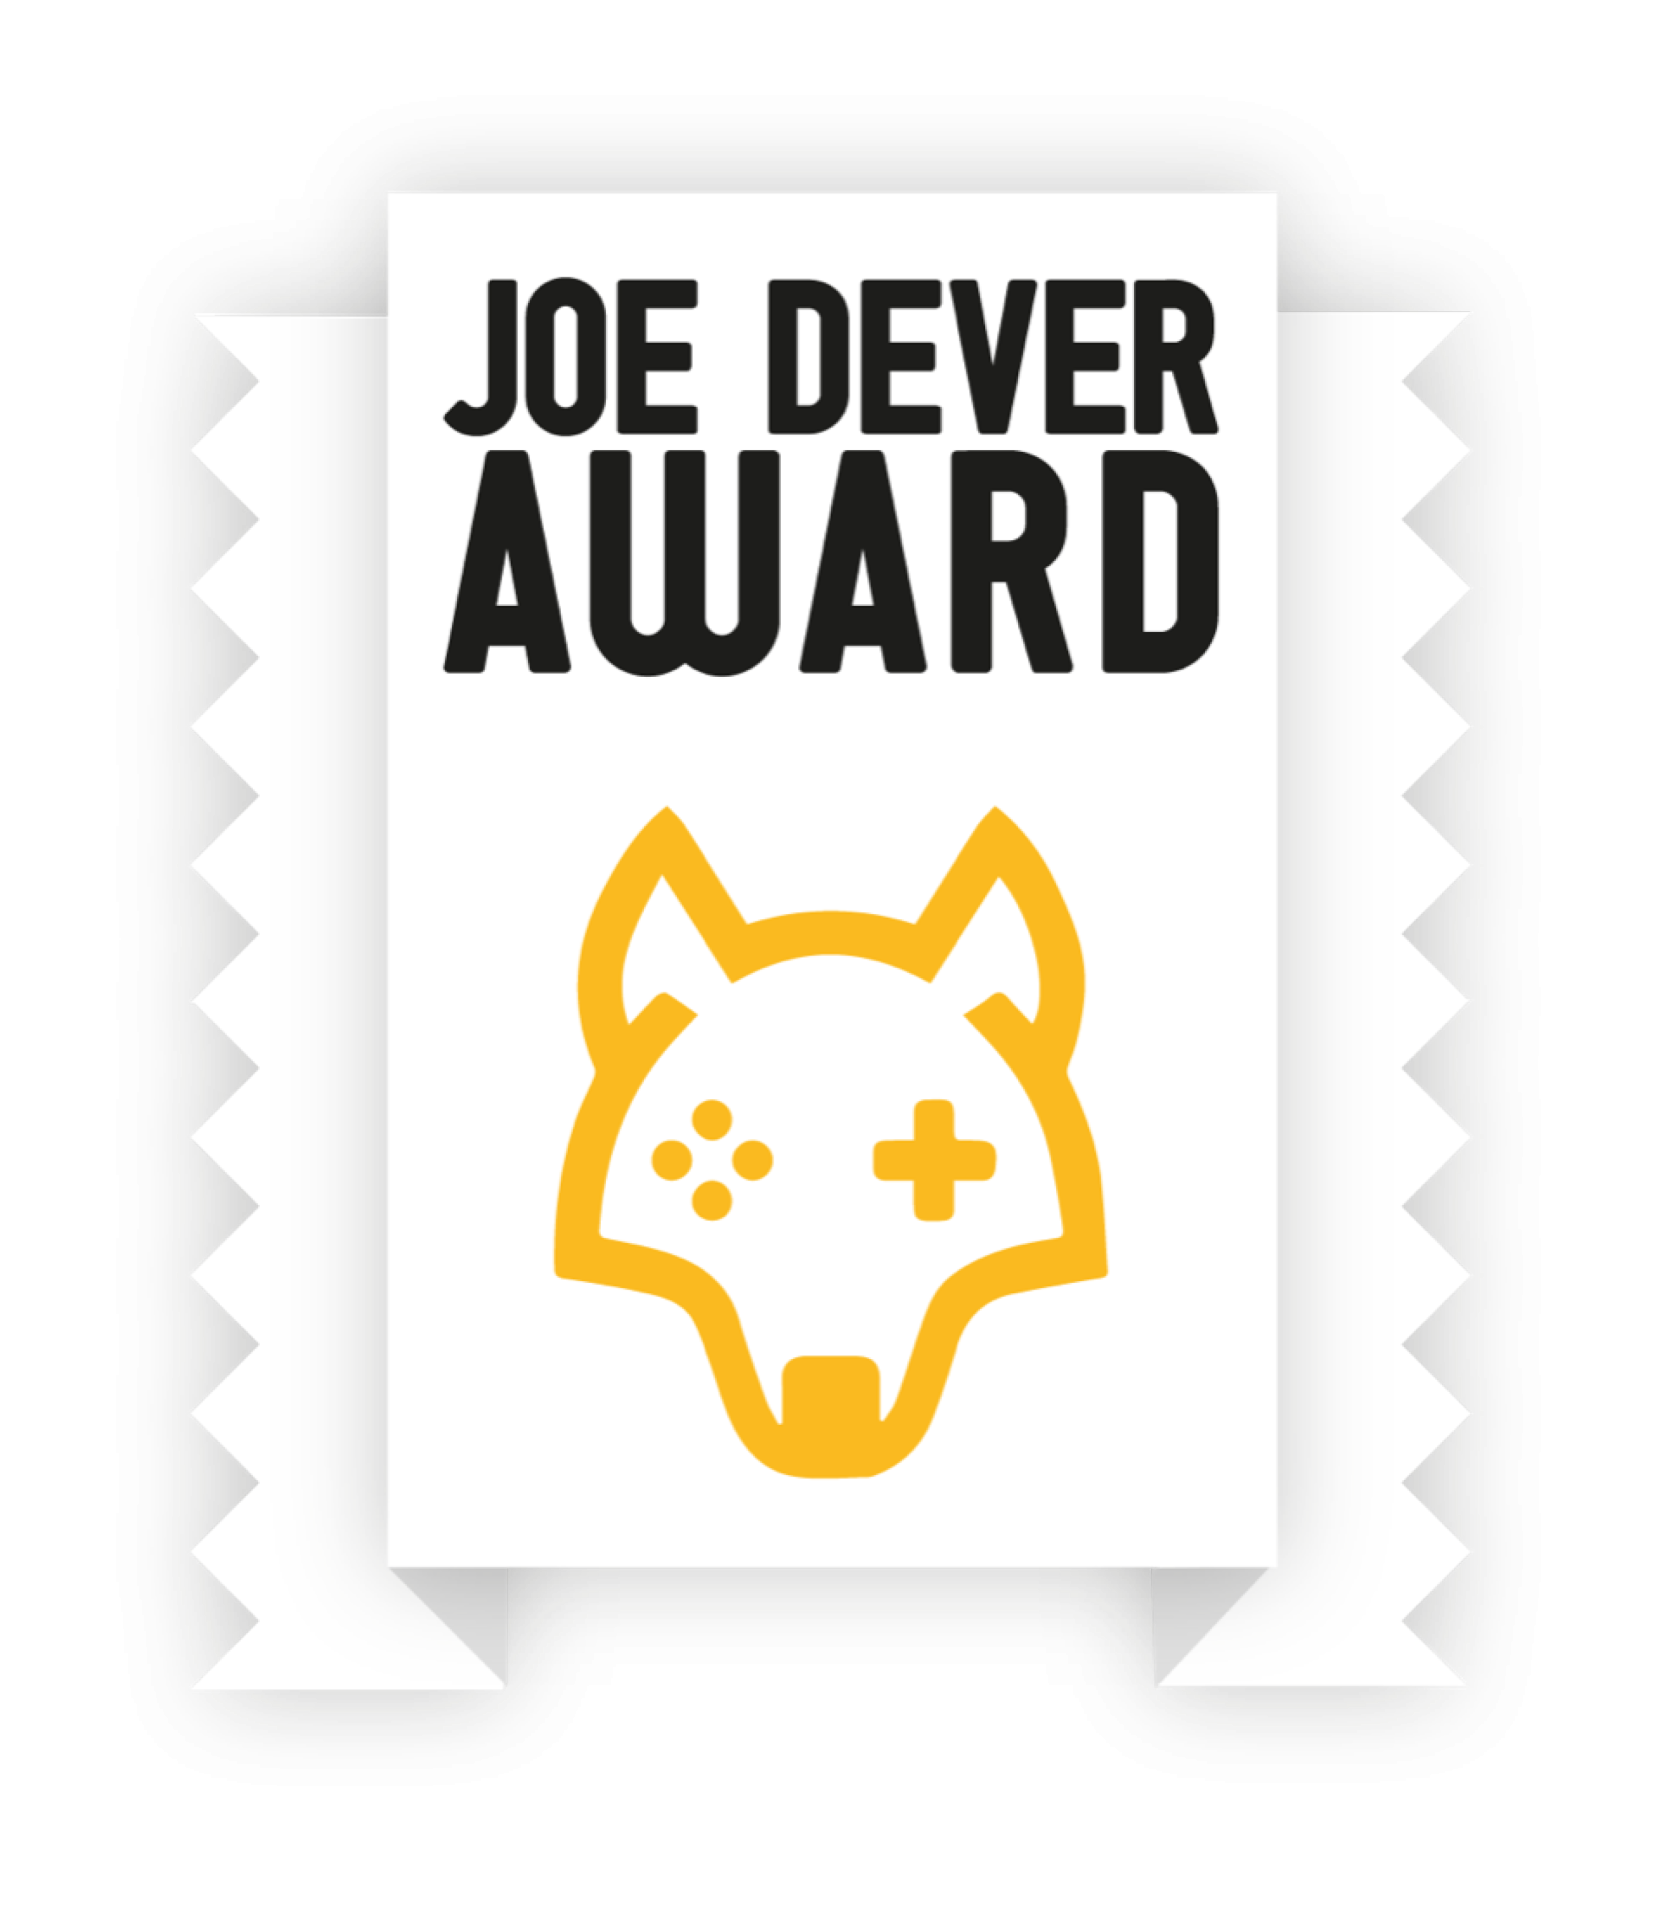 Joe Dever Award